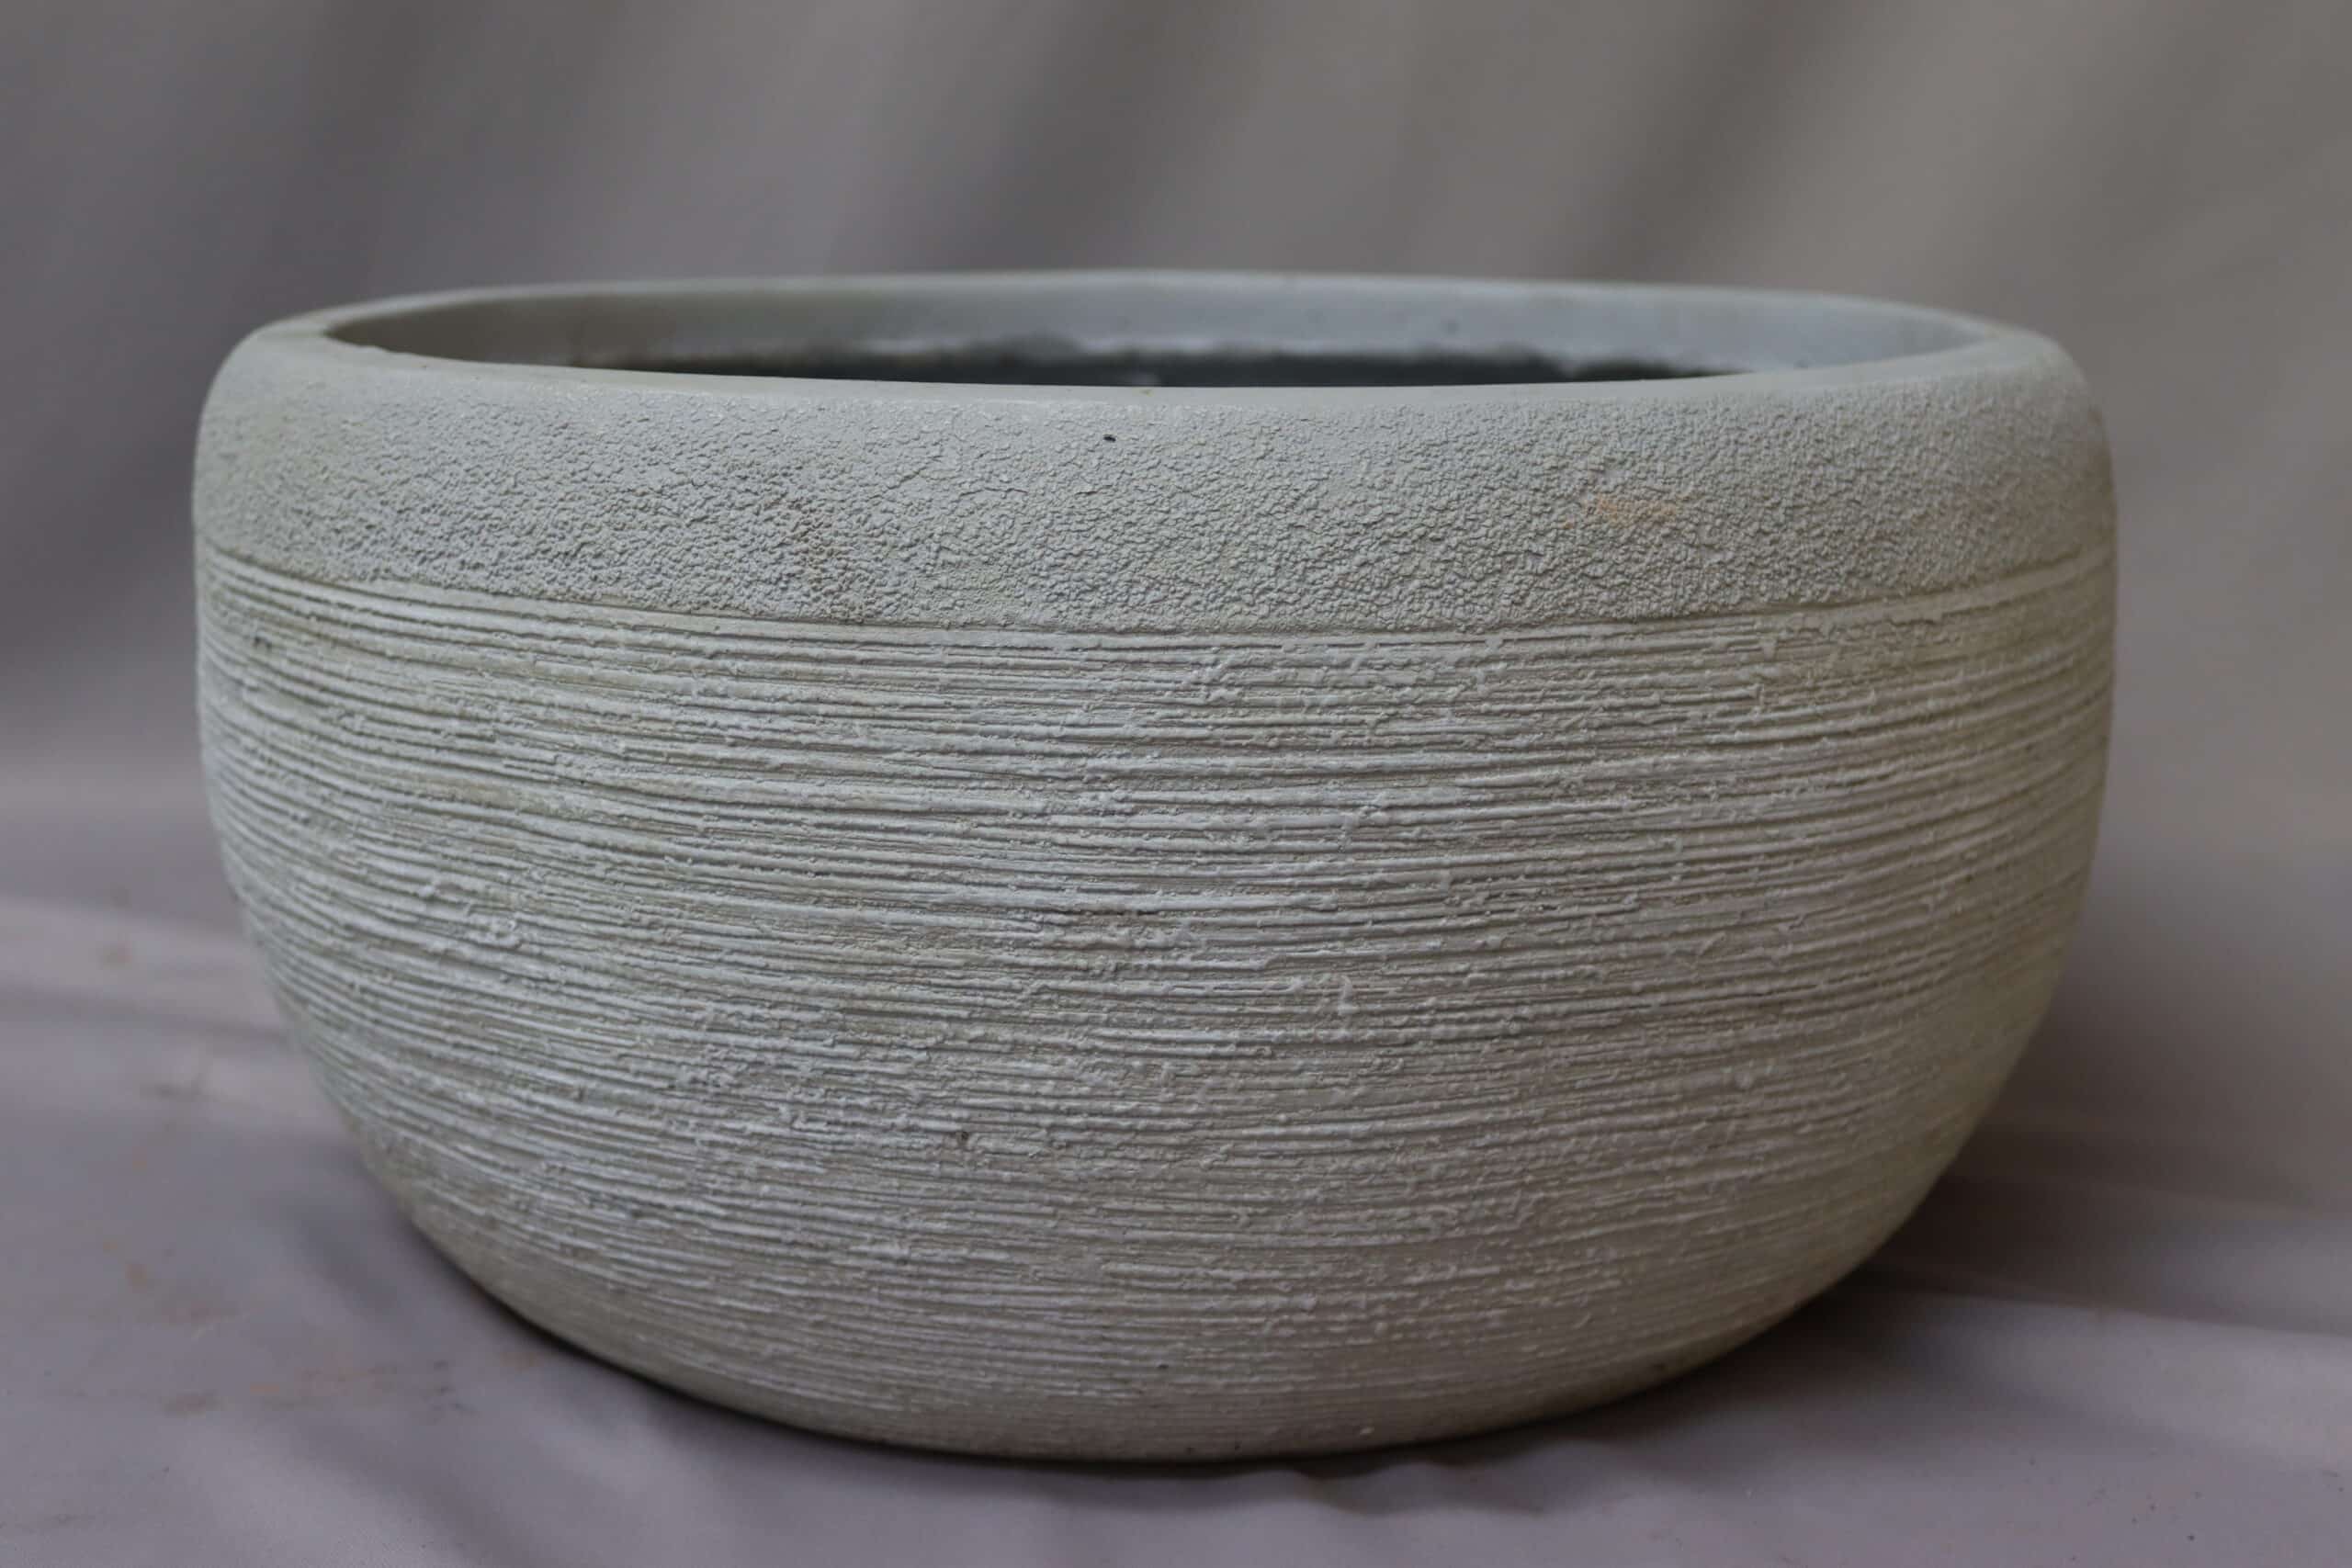 Round decorative stone plant bowl in light grey.